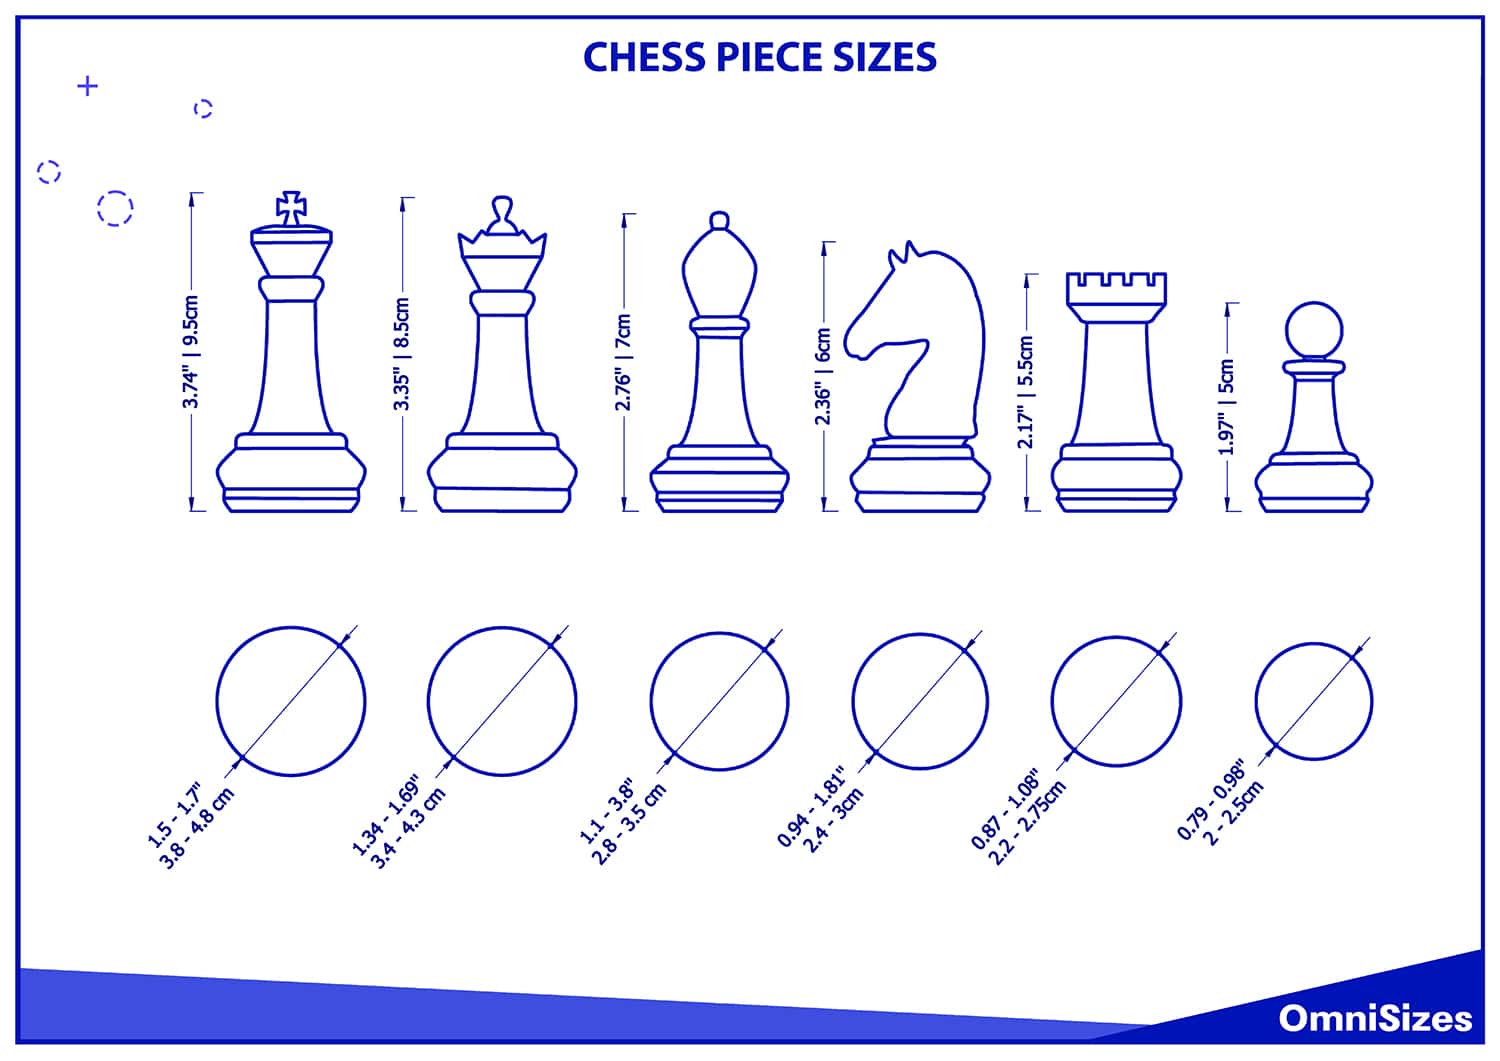 Chess piece sizes